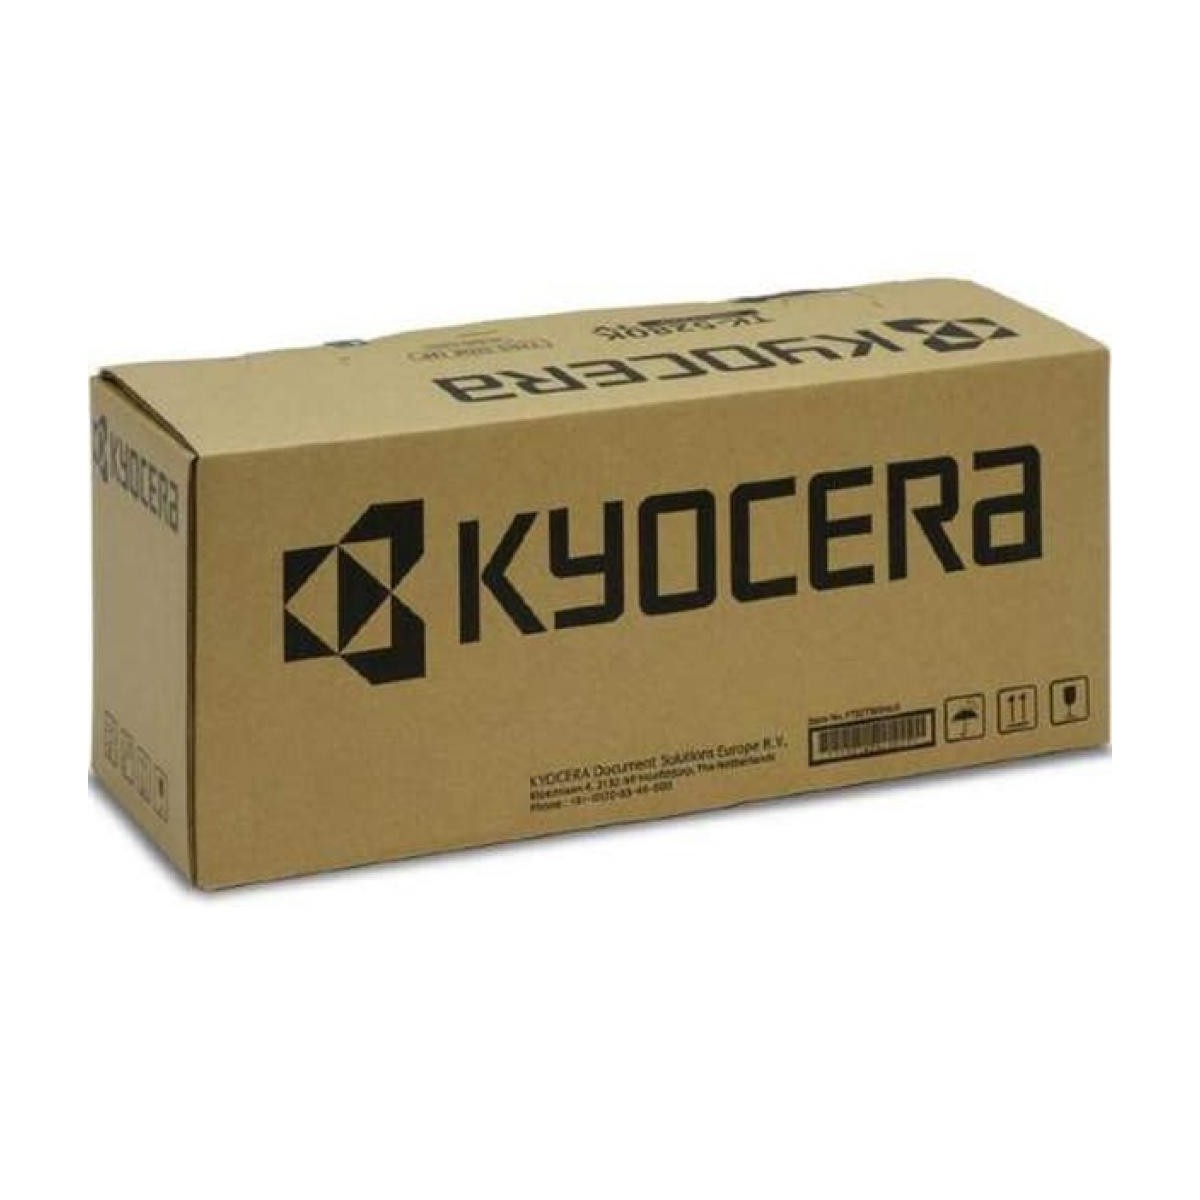 Kyocera Developer DV6305